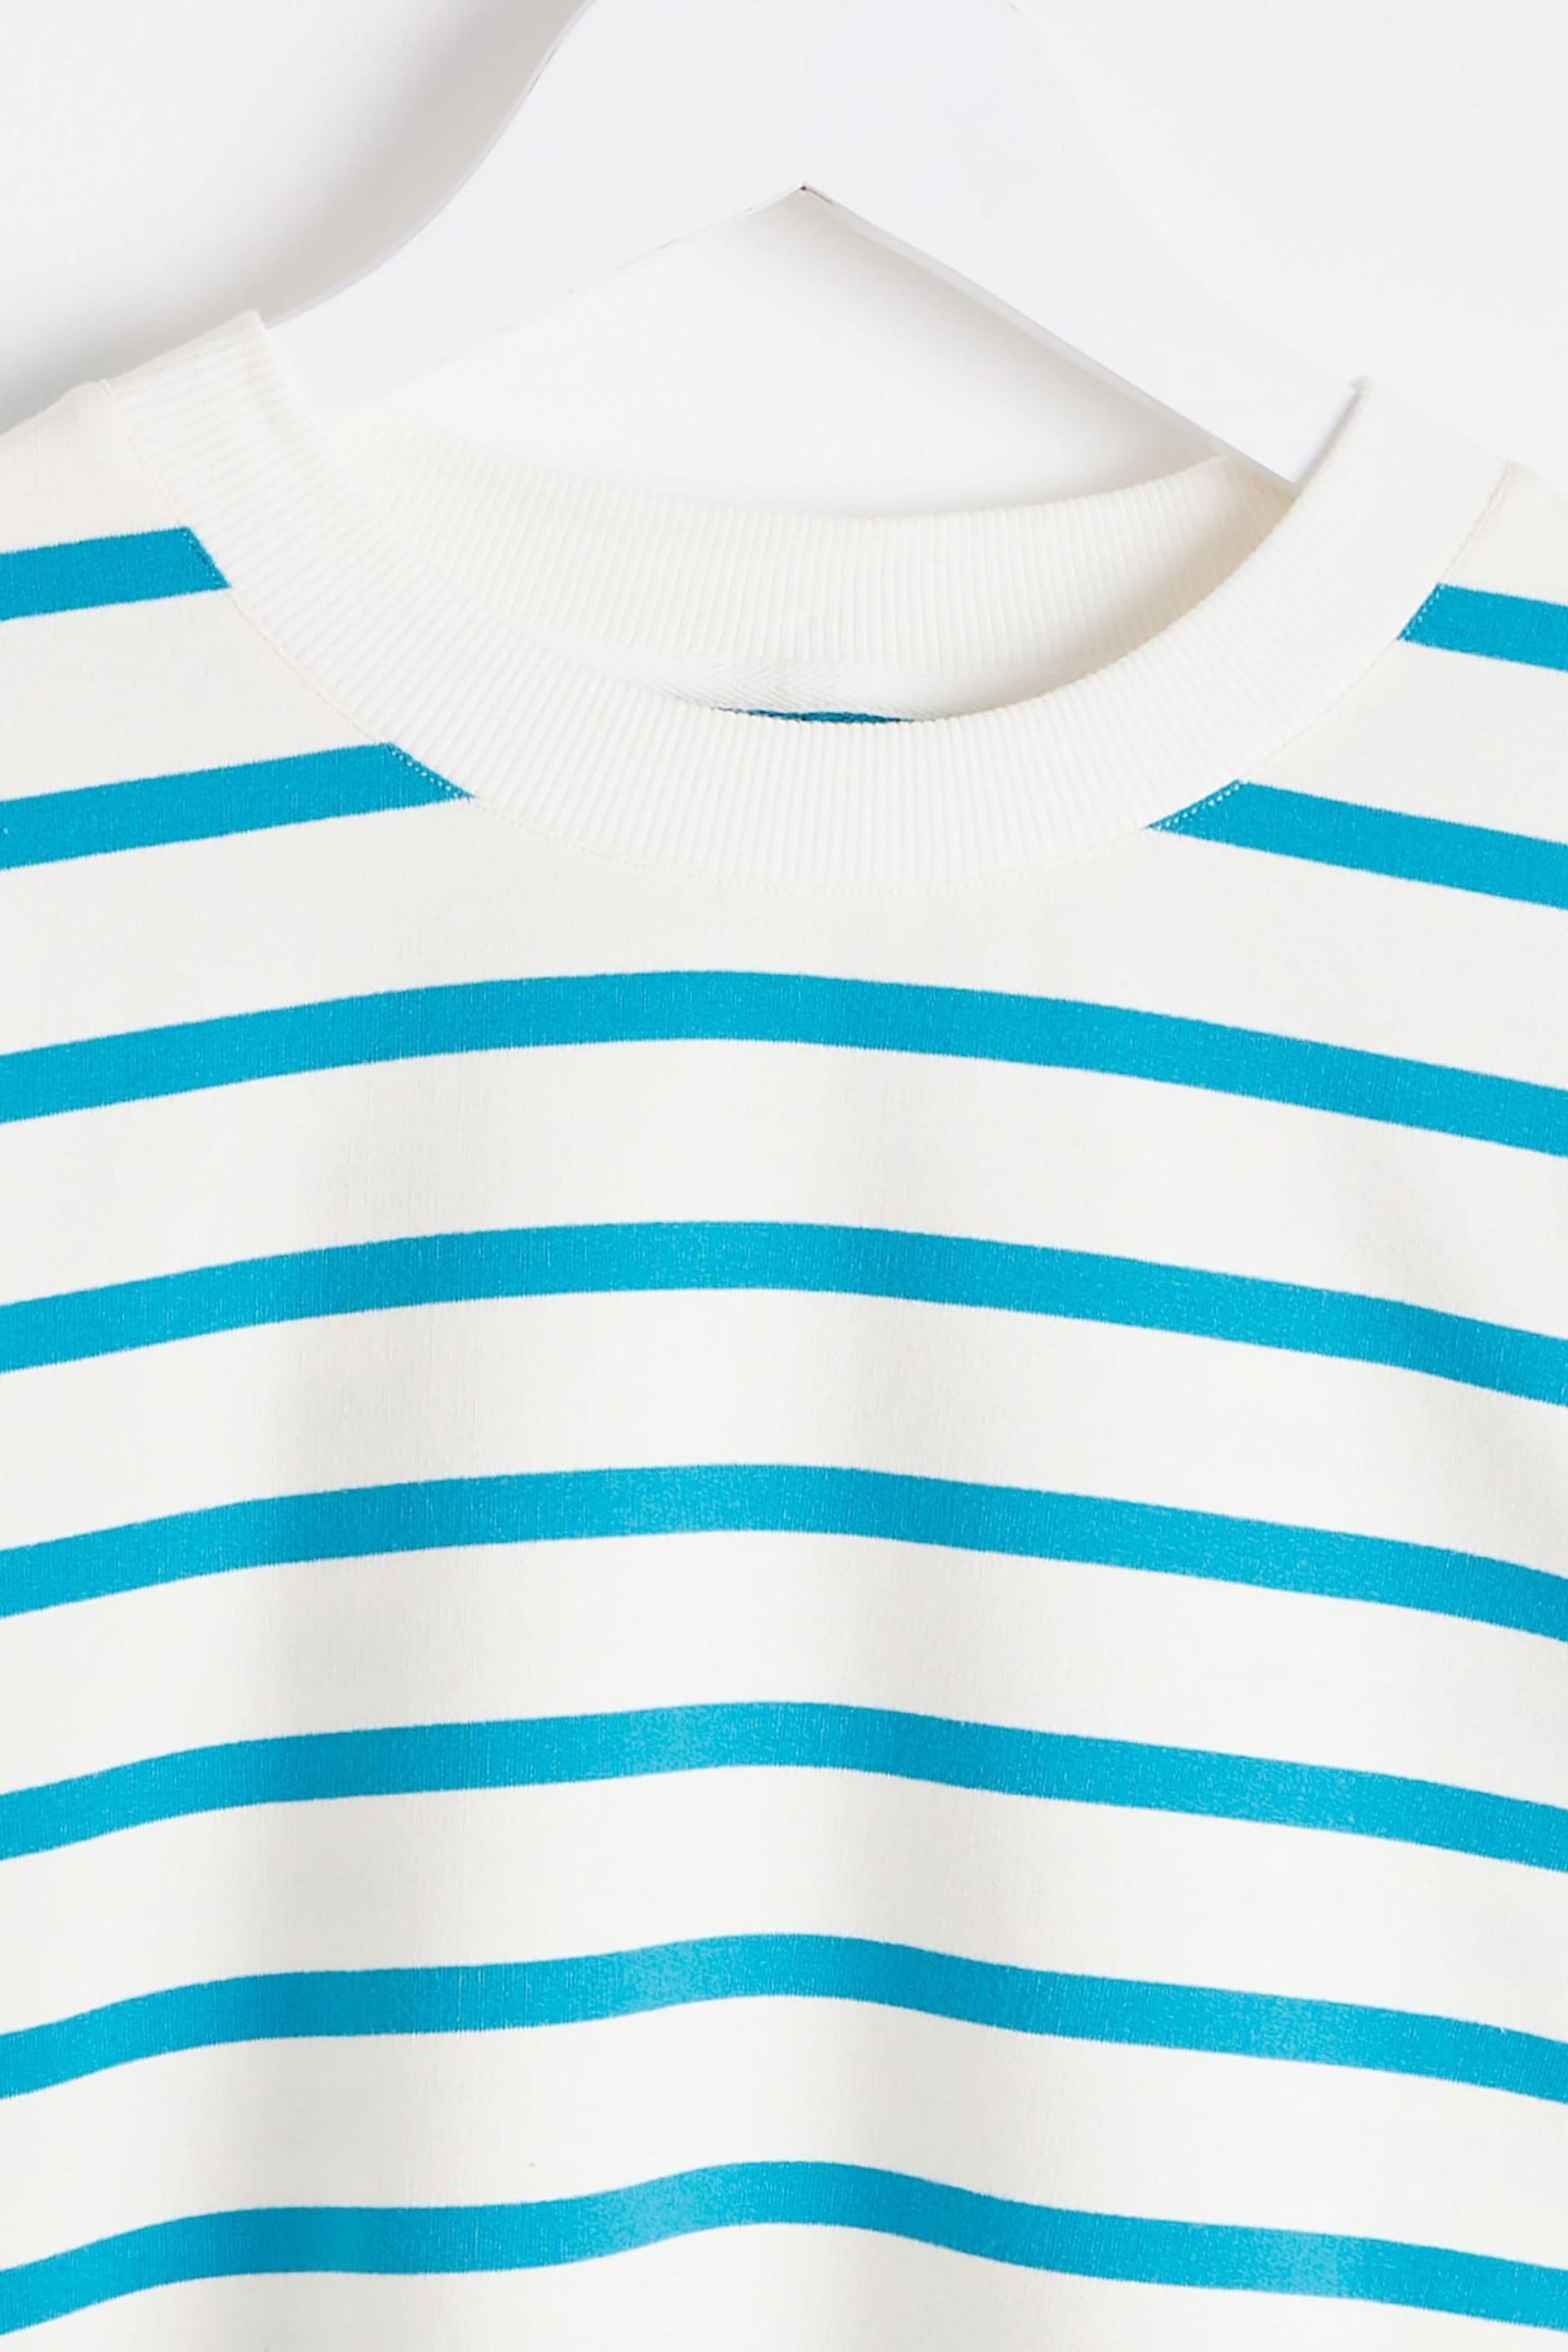 Oliver Bonas Green Stripe Pleat Sleeve T-Shirt - Image 3 of 5